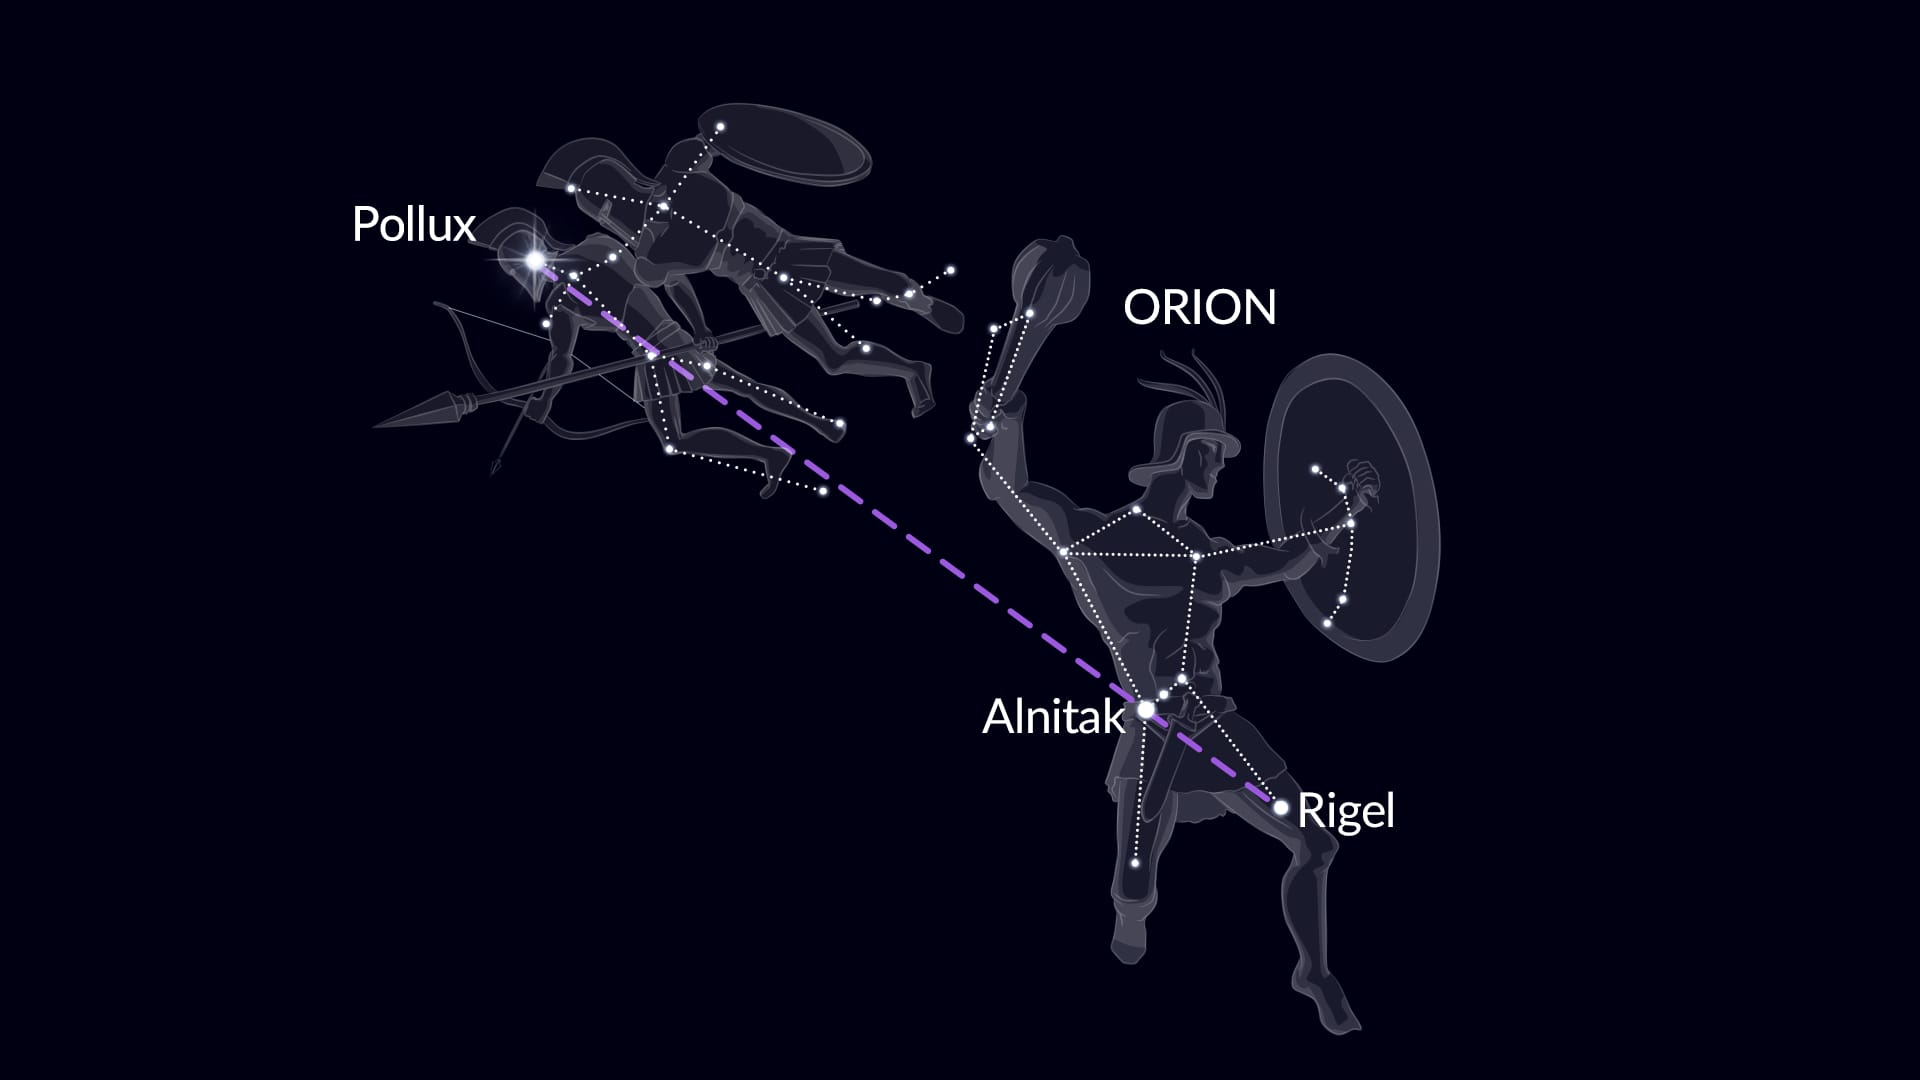 Find Pollux via Orion